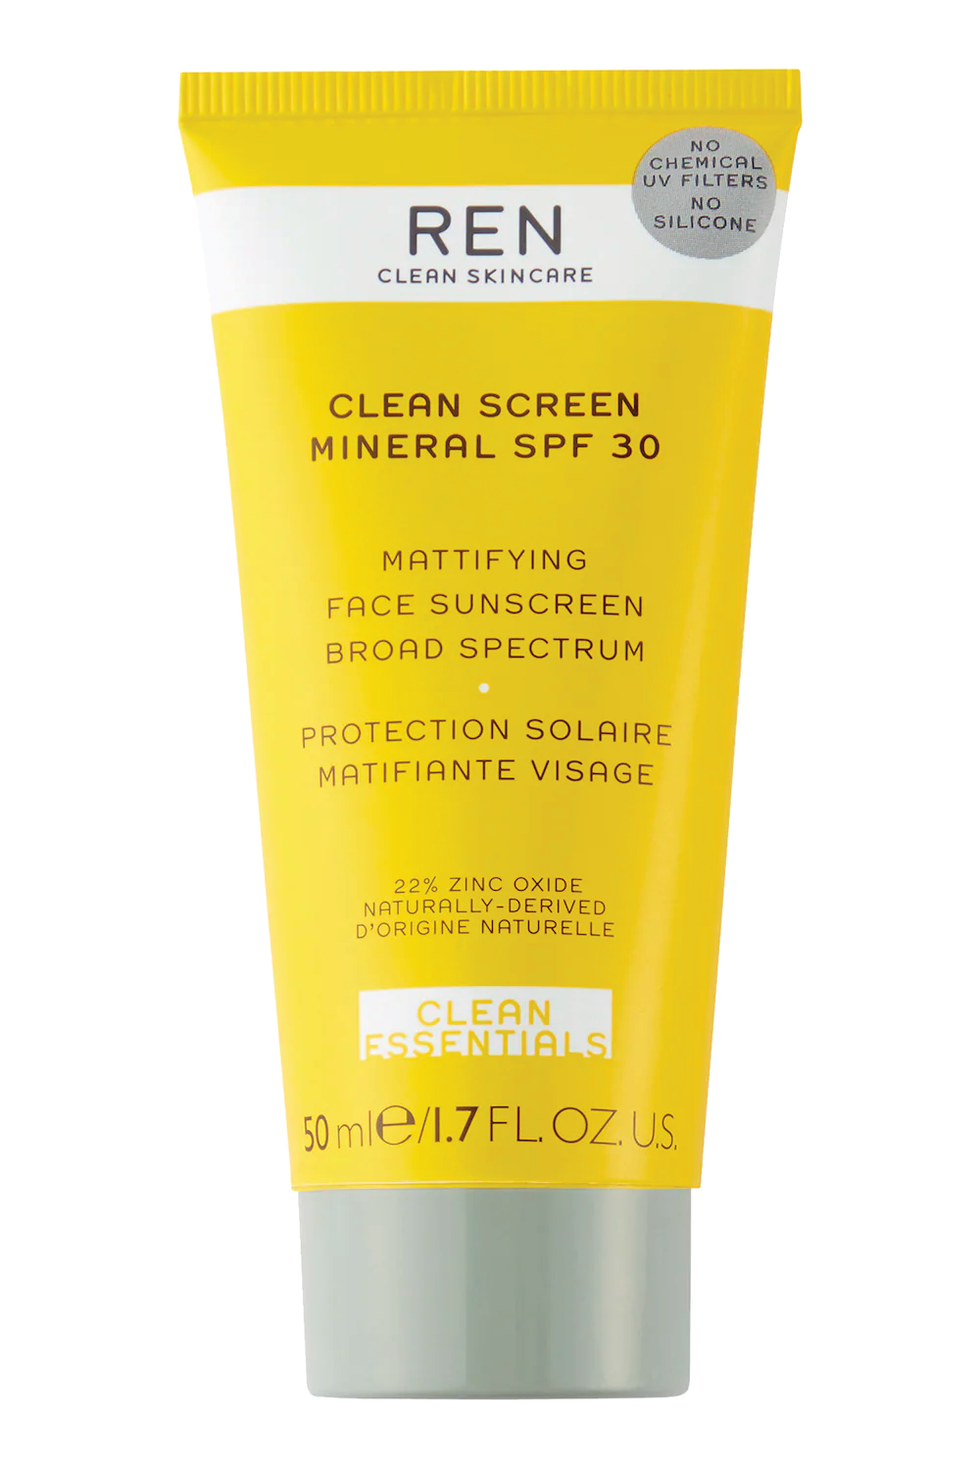 REN Clean Skincare Clean Screen Mineral Mattifying Face Sunscreen SPF 30